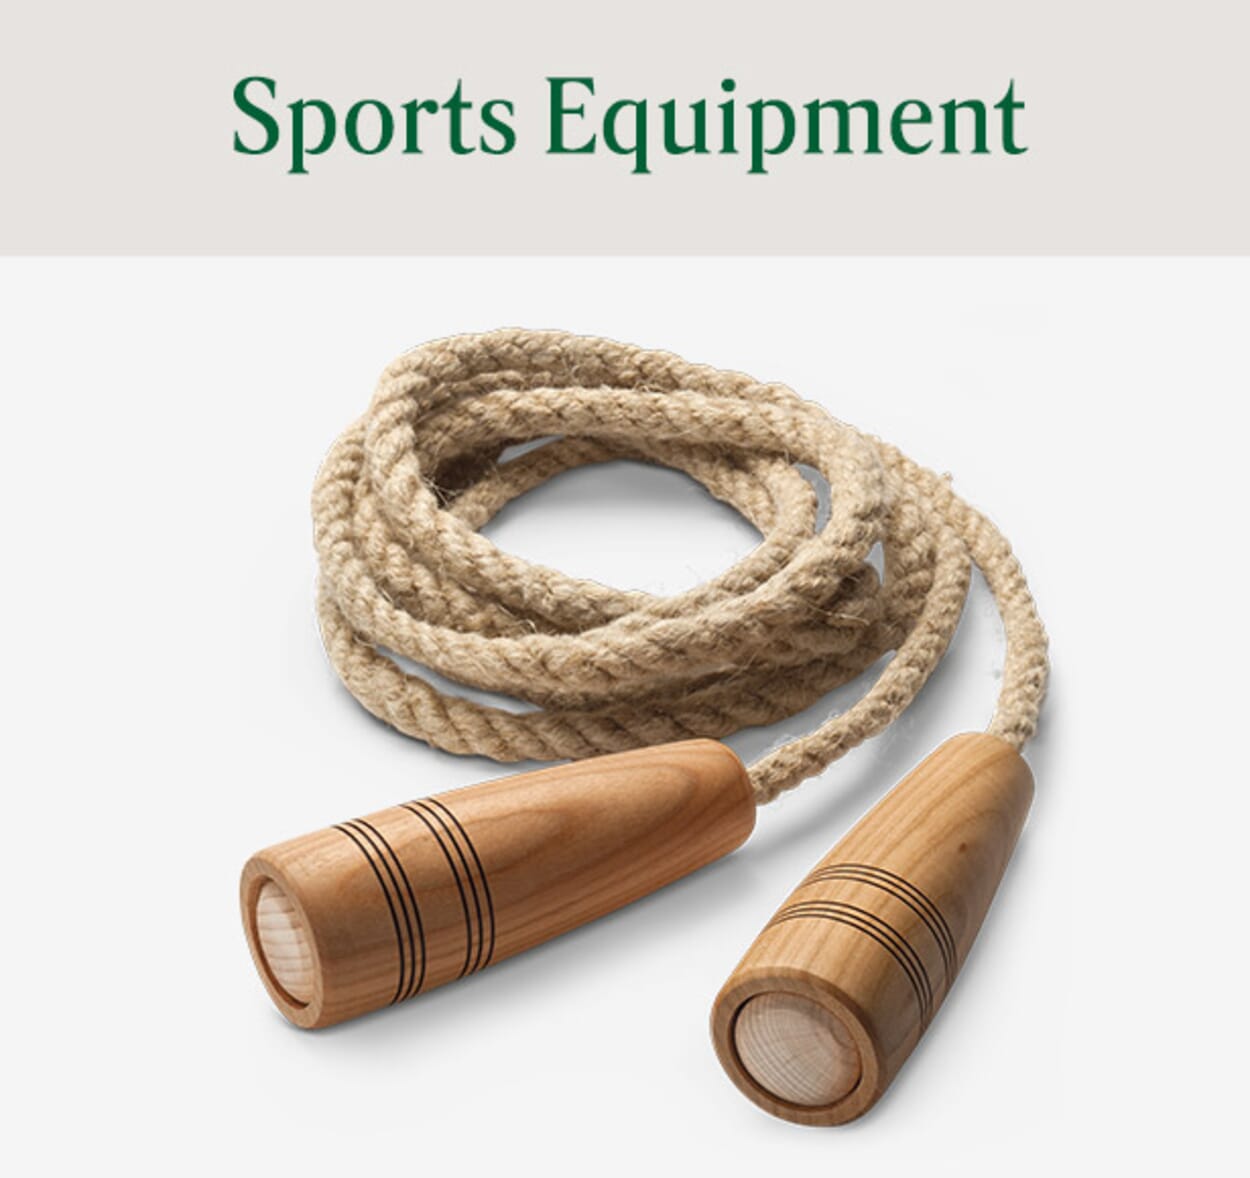 Sports Equipment